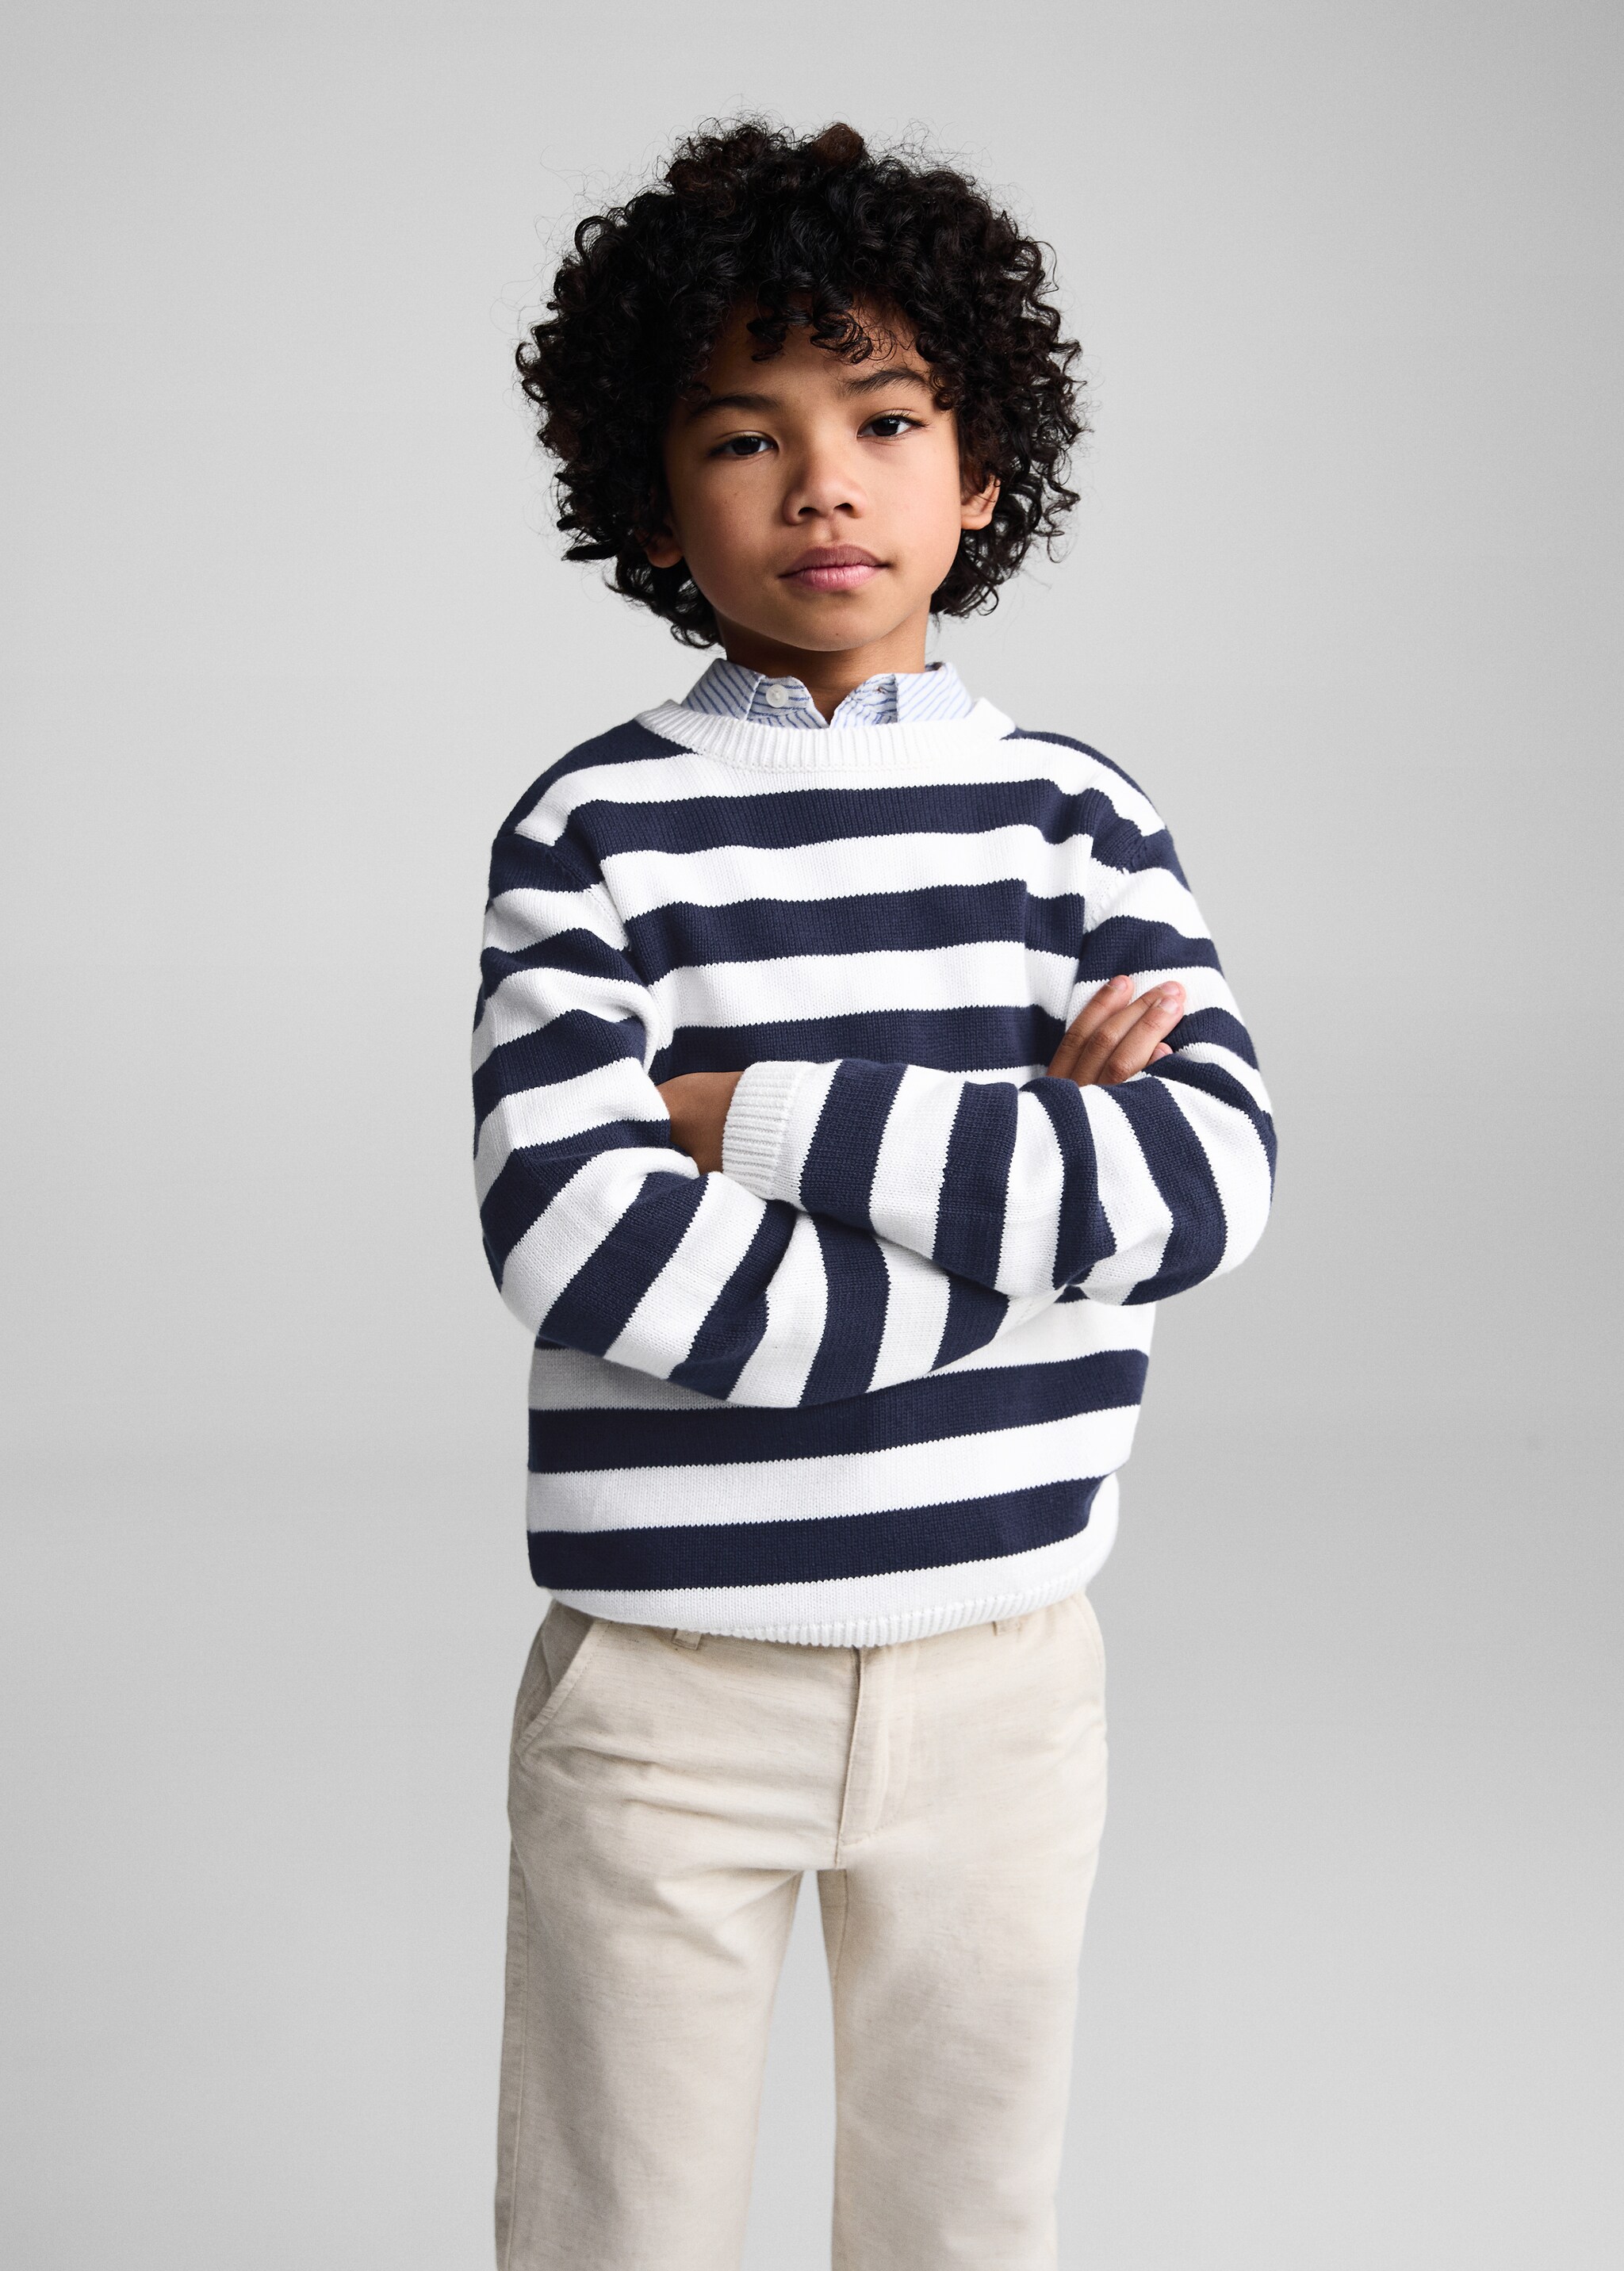 Knit striped sweater - Medium plane